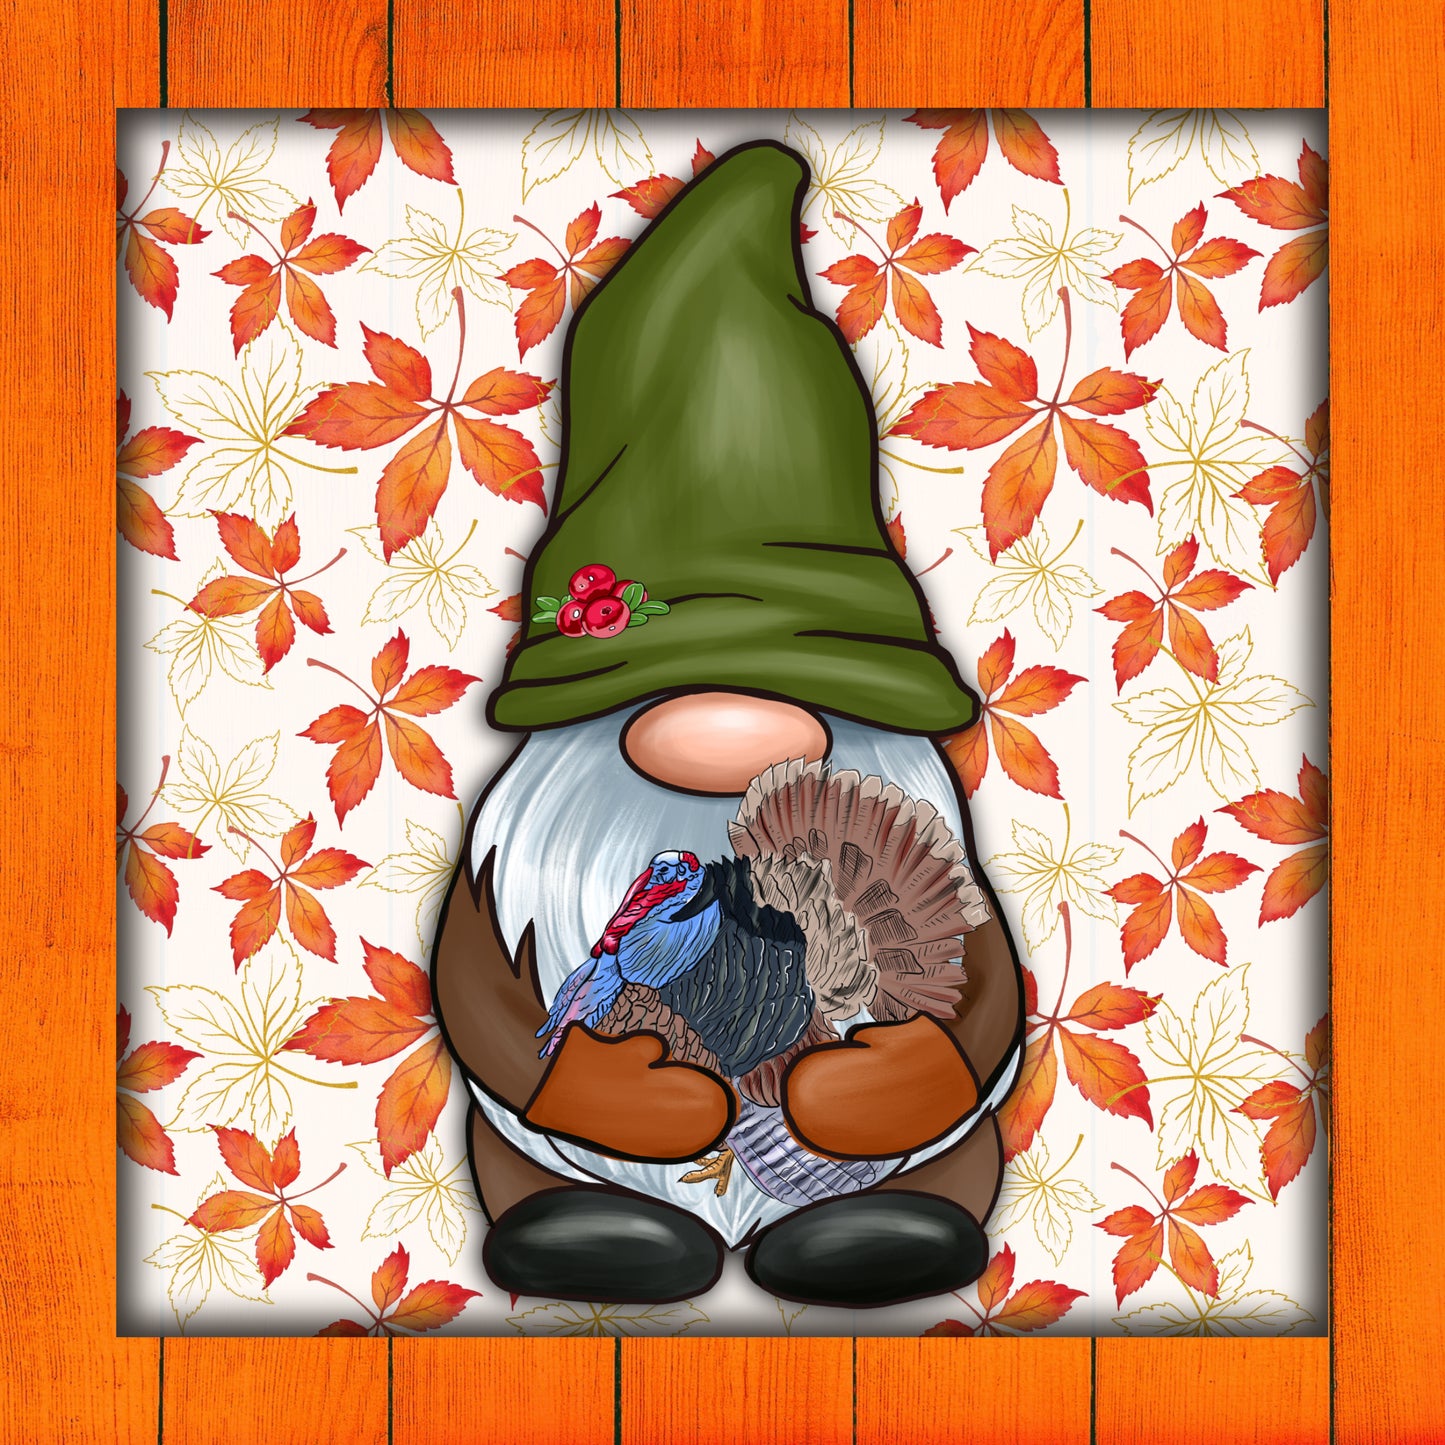 Coaster Set - Thanksgiving Gnomes - Set of 4